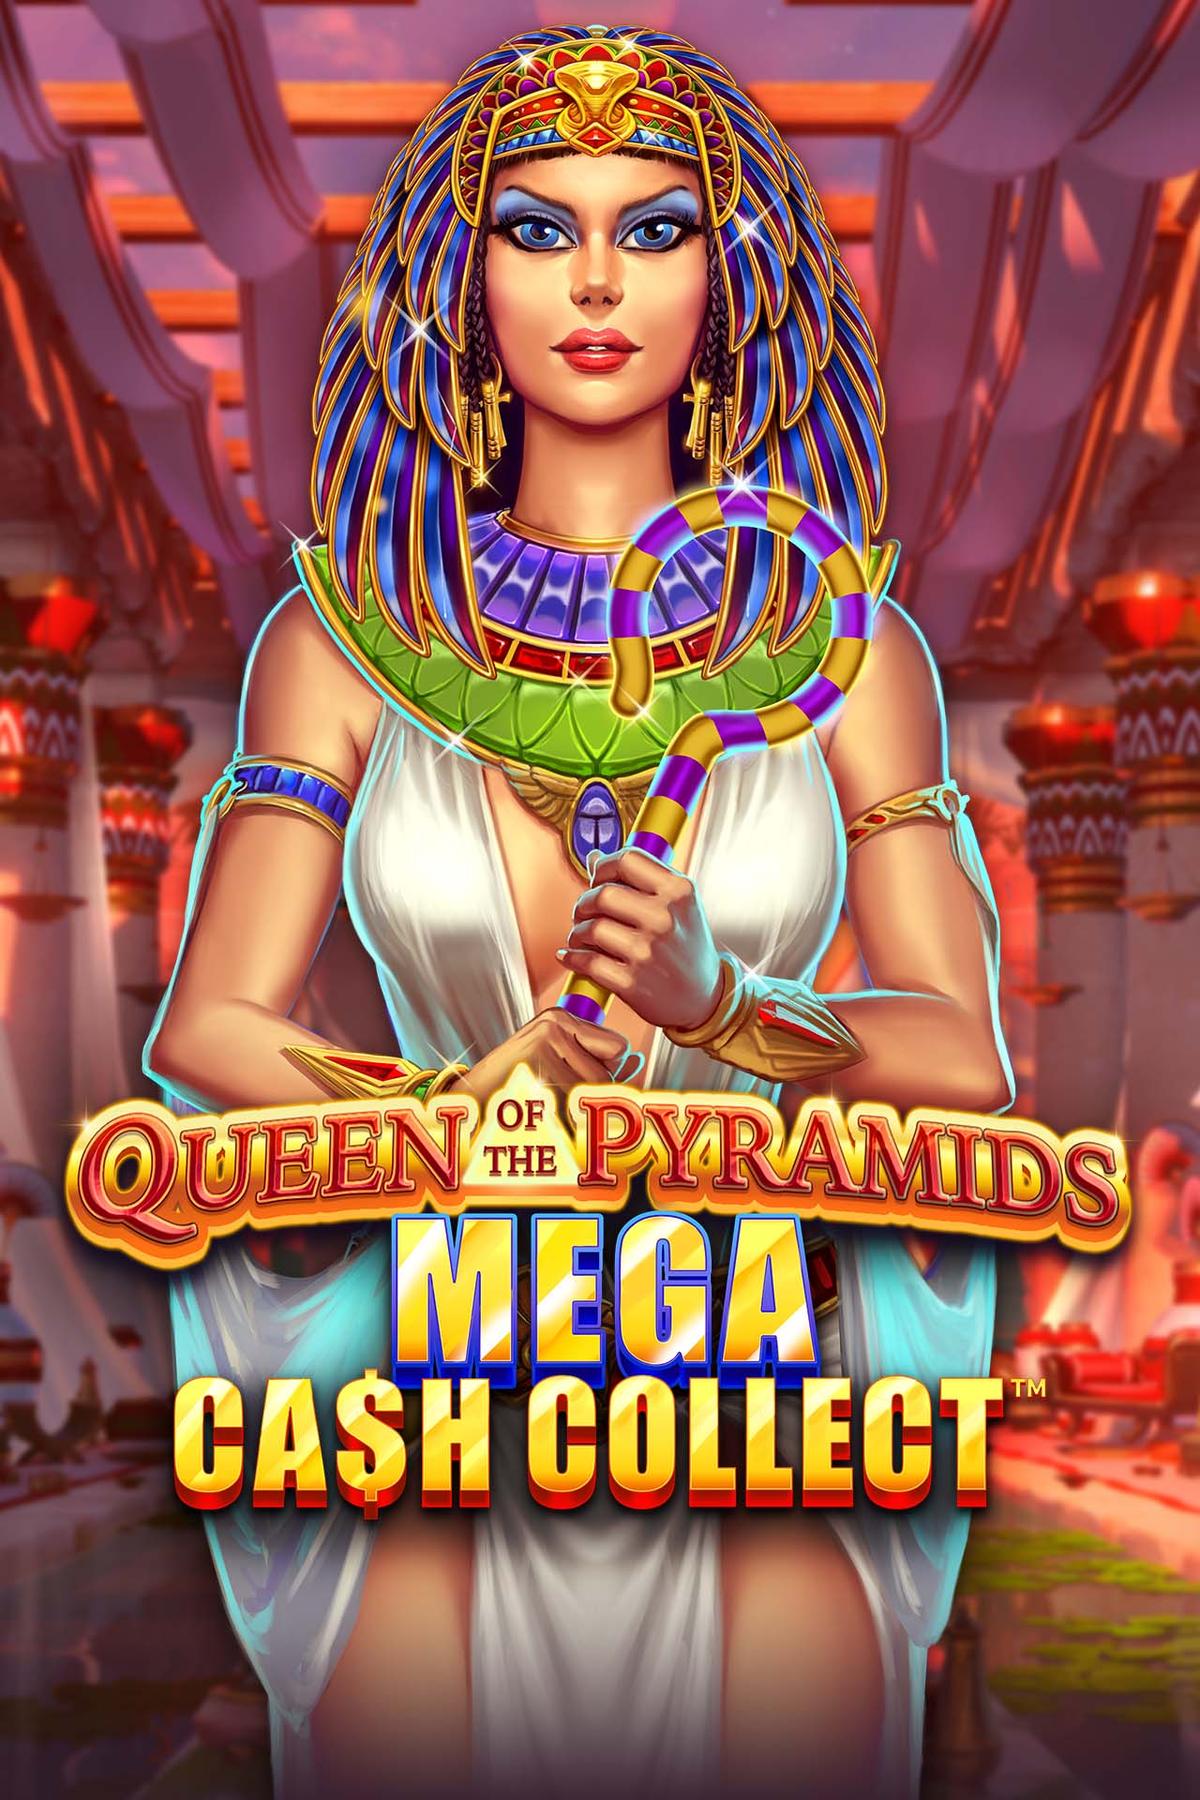 Queen of the Pyramids: Mega Cash Collect